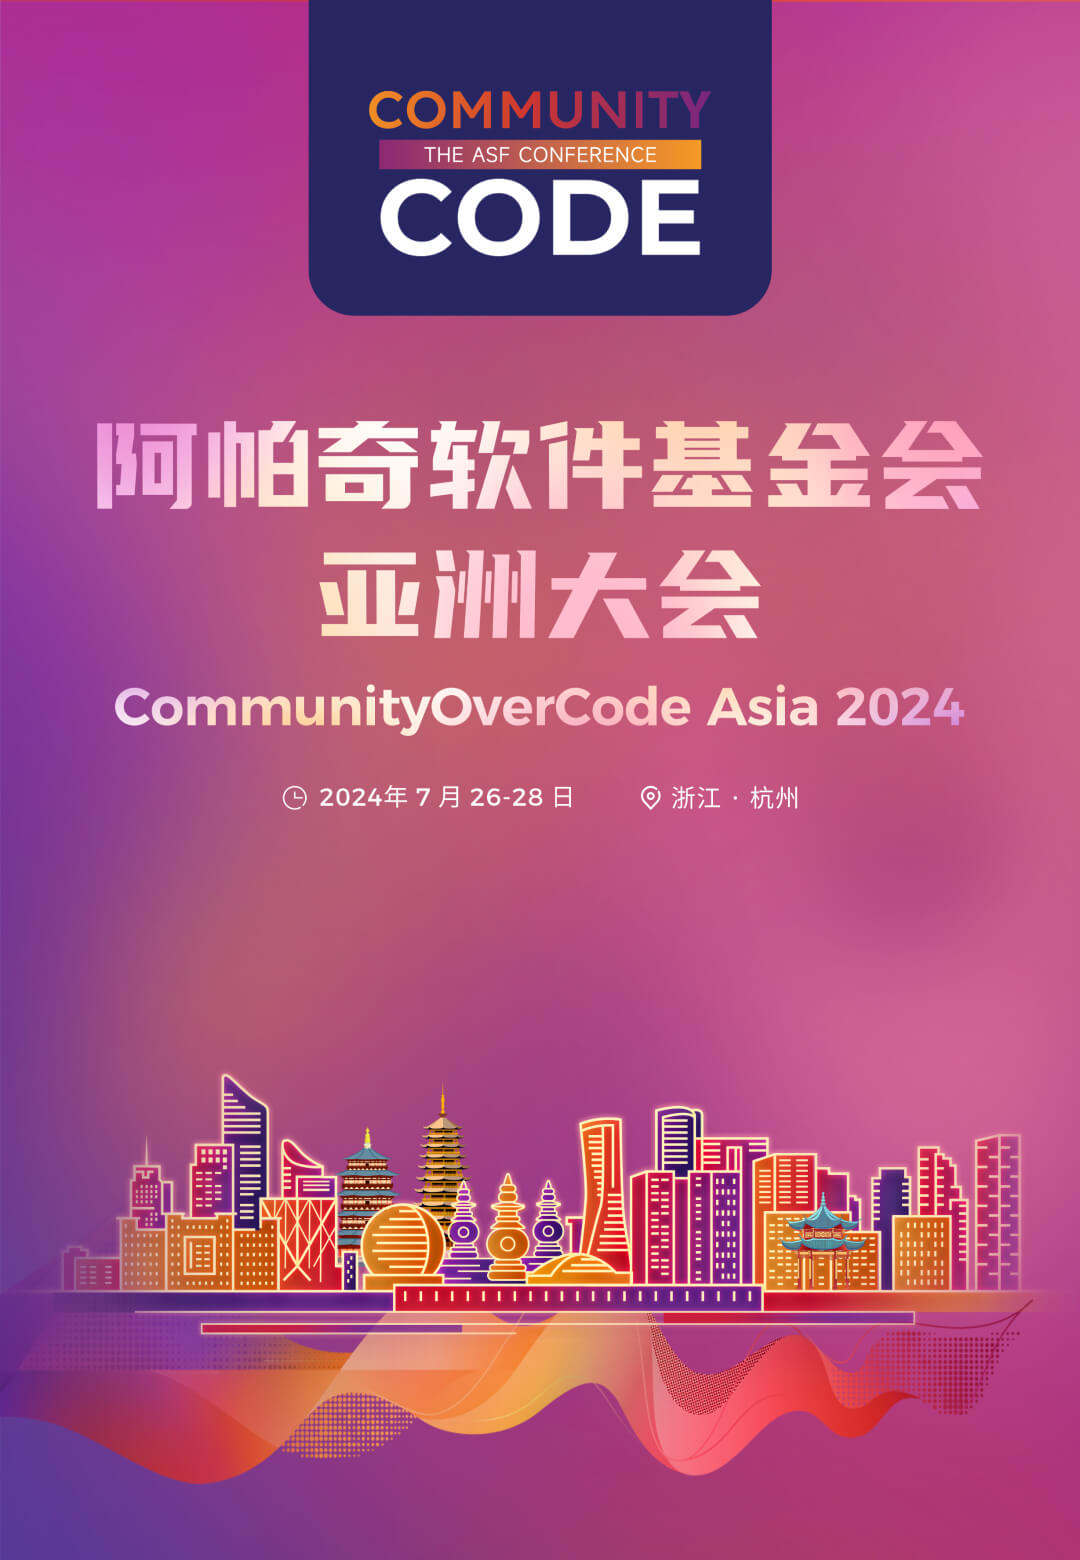 Community Over Code Asia 2024